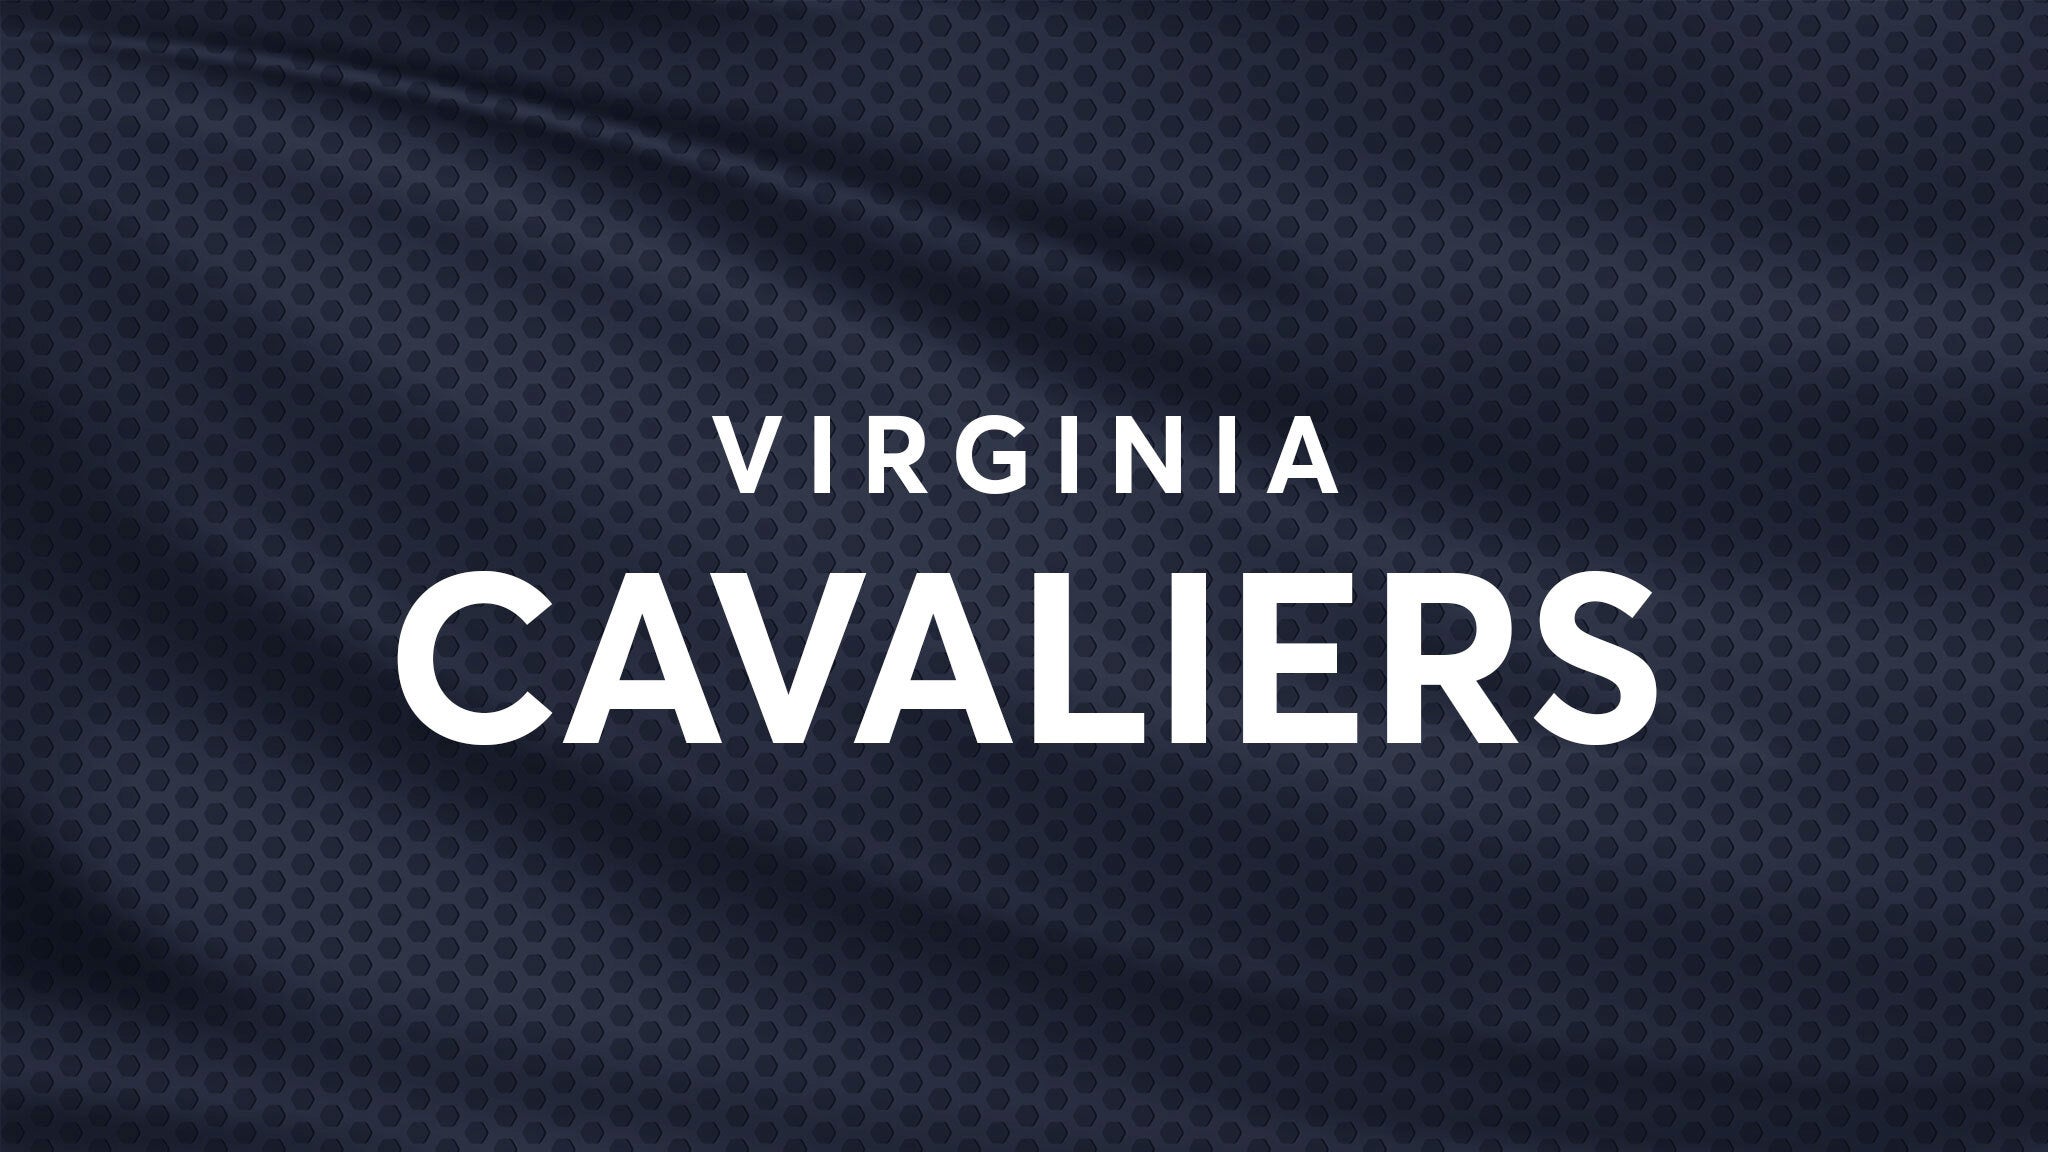 Virginia Cavaliers Football vs. Maryland Terrapins Football hero